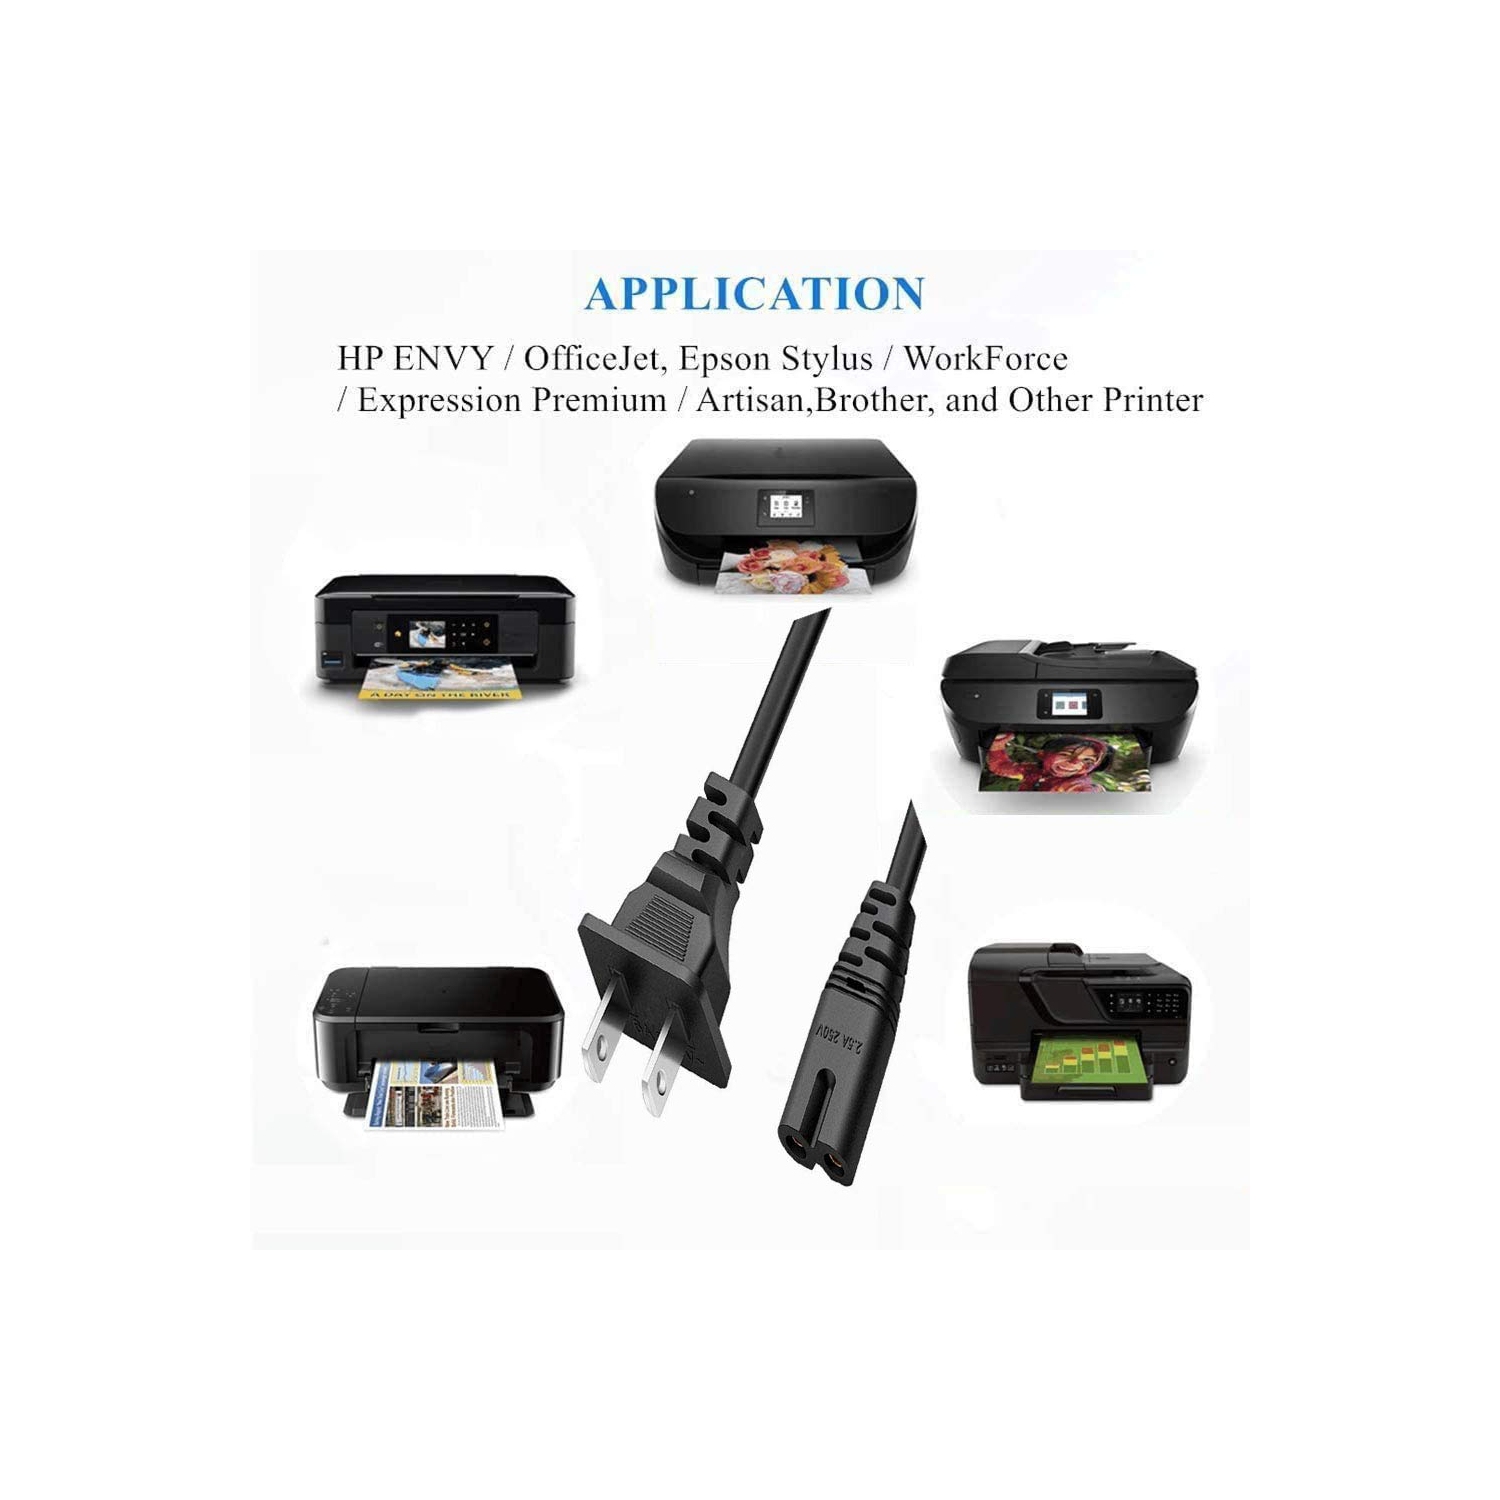 Deskjet 4155 Power Cord Printer AC Power Cable Compatible for HP DeskJet 6940 4155 3755 3634 3632 3054 2755 2655 2622